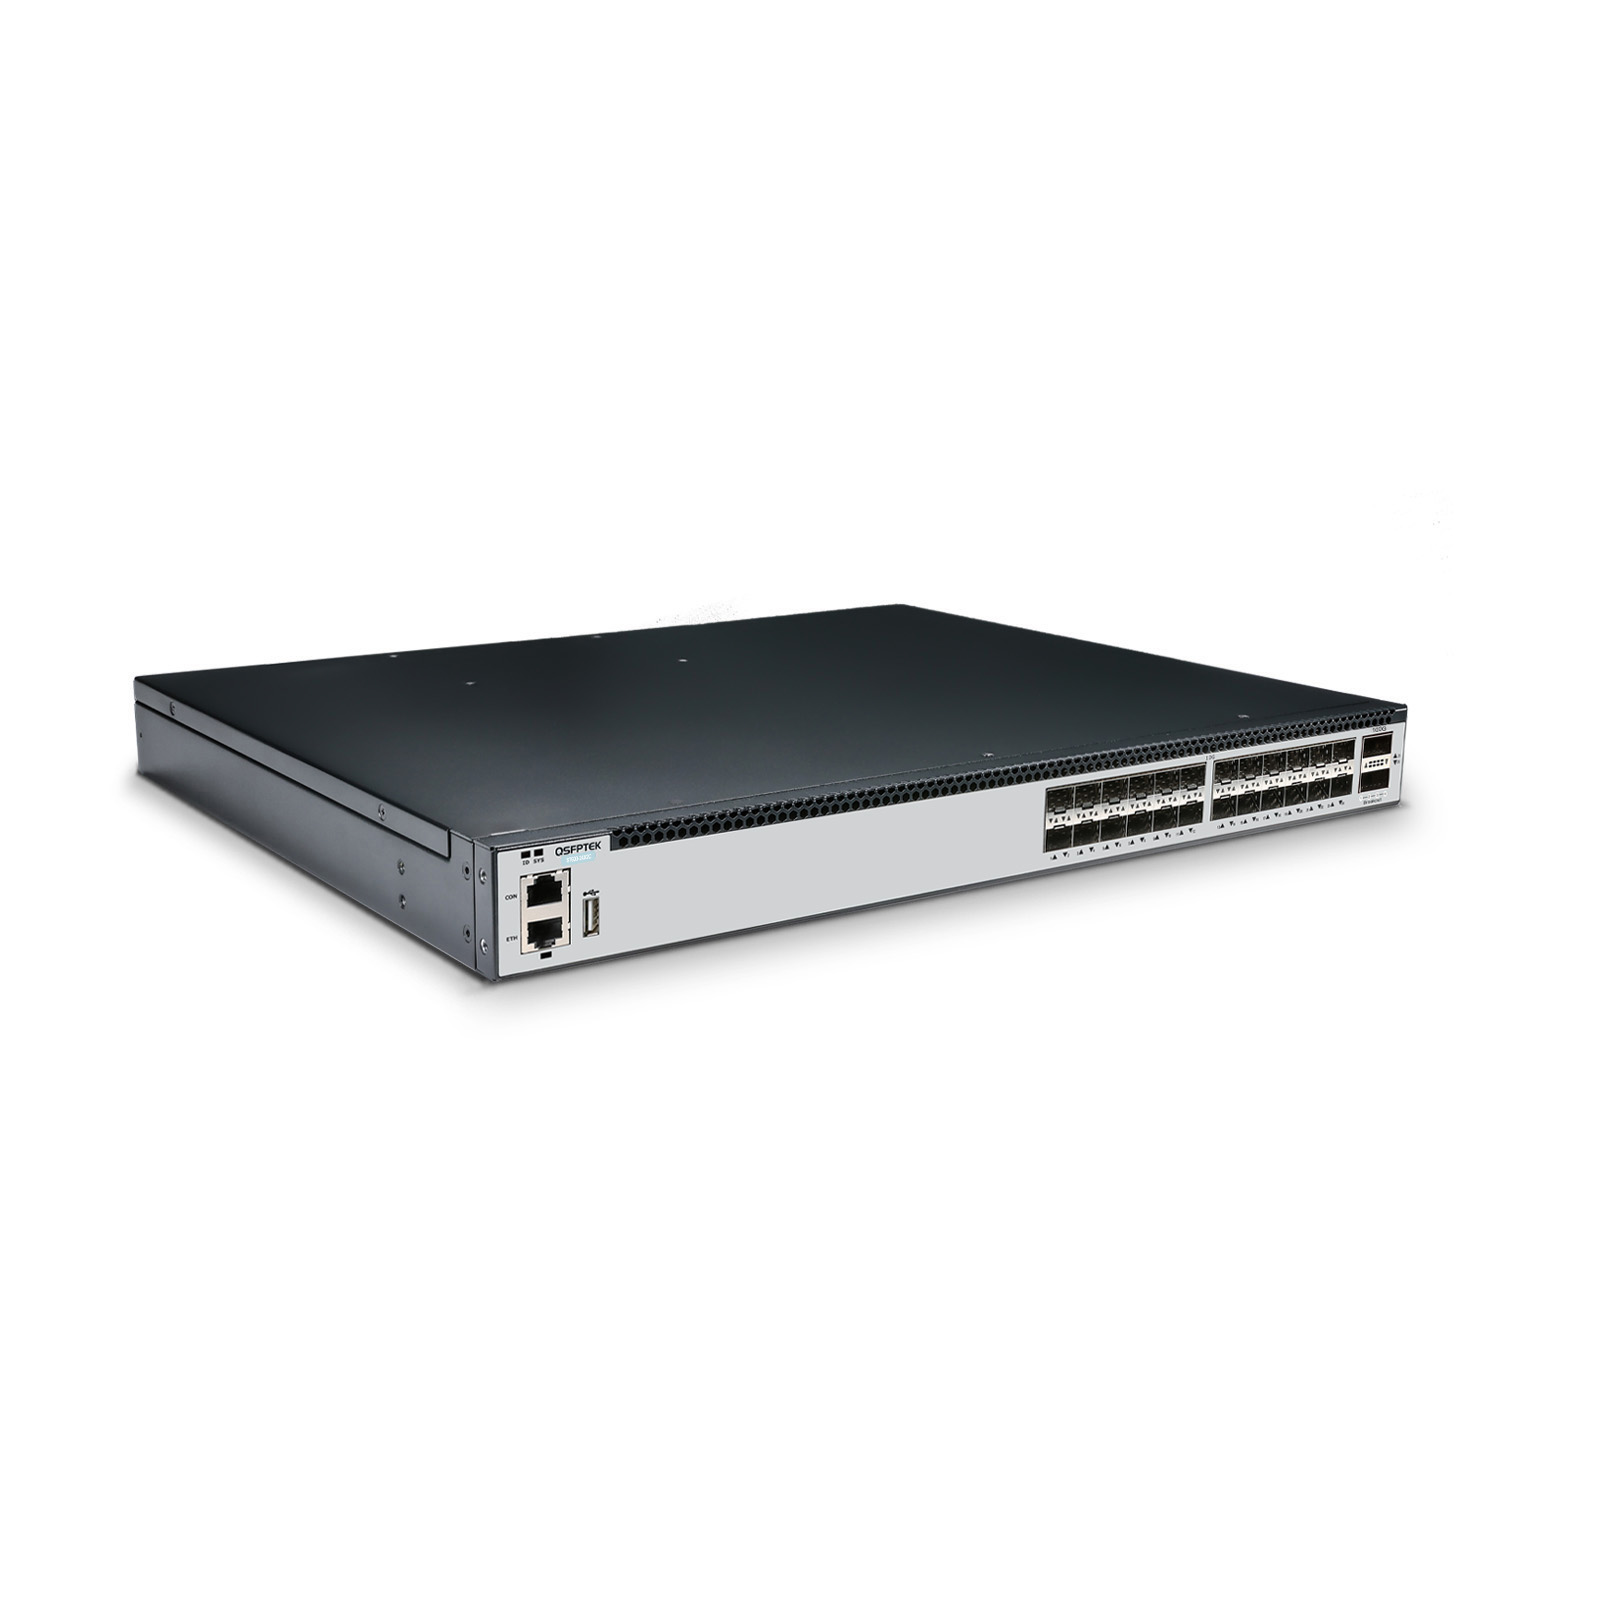 S5600-4T12X, Managed Layer 3+ Gigabit Network Switch, with 10G SFP+  Uplinks, Support MLAG, VXLAN - QSFPTEK